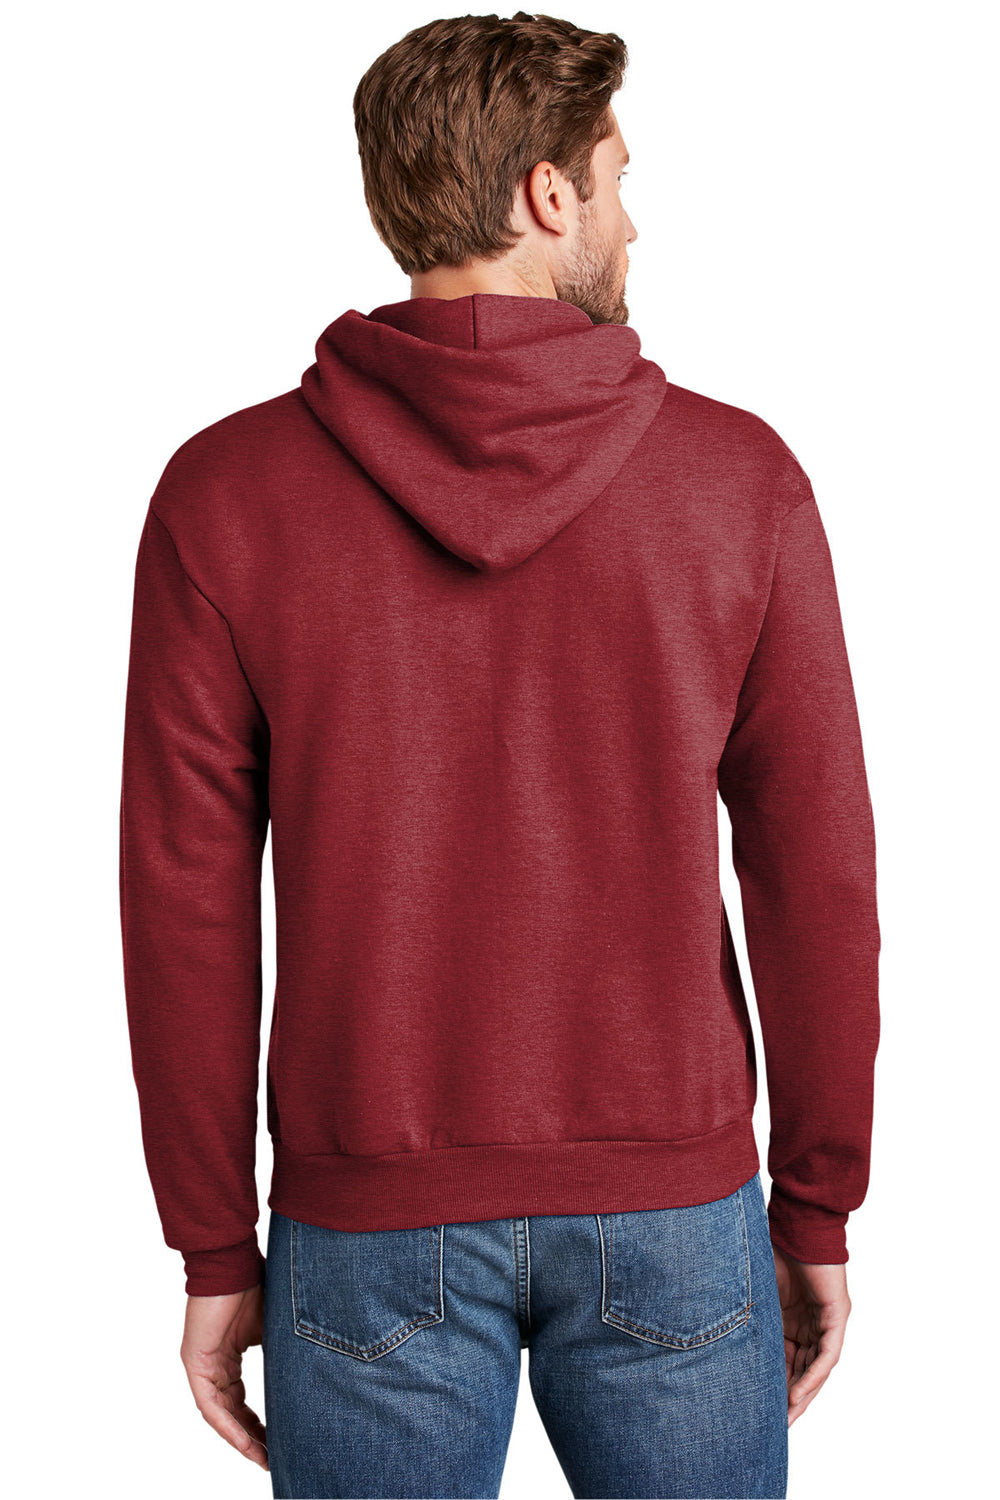 Hanes P170 Mens EcoSmart Print Pro XP Hooded Sweatshirt Hoodie Heather Red Back